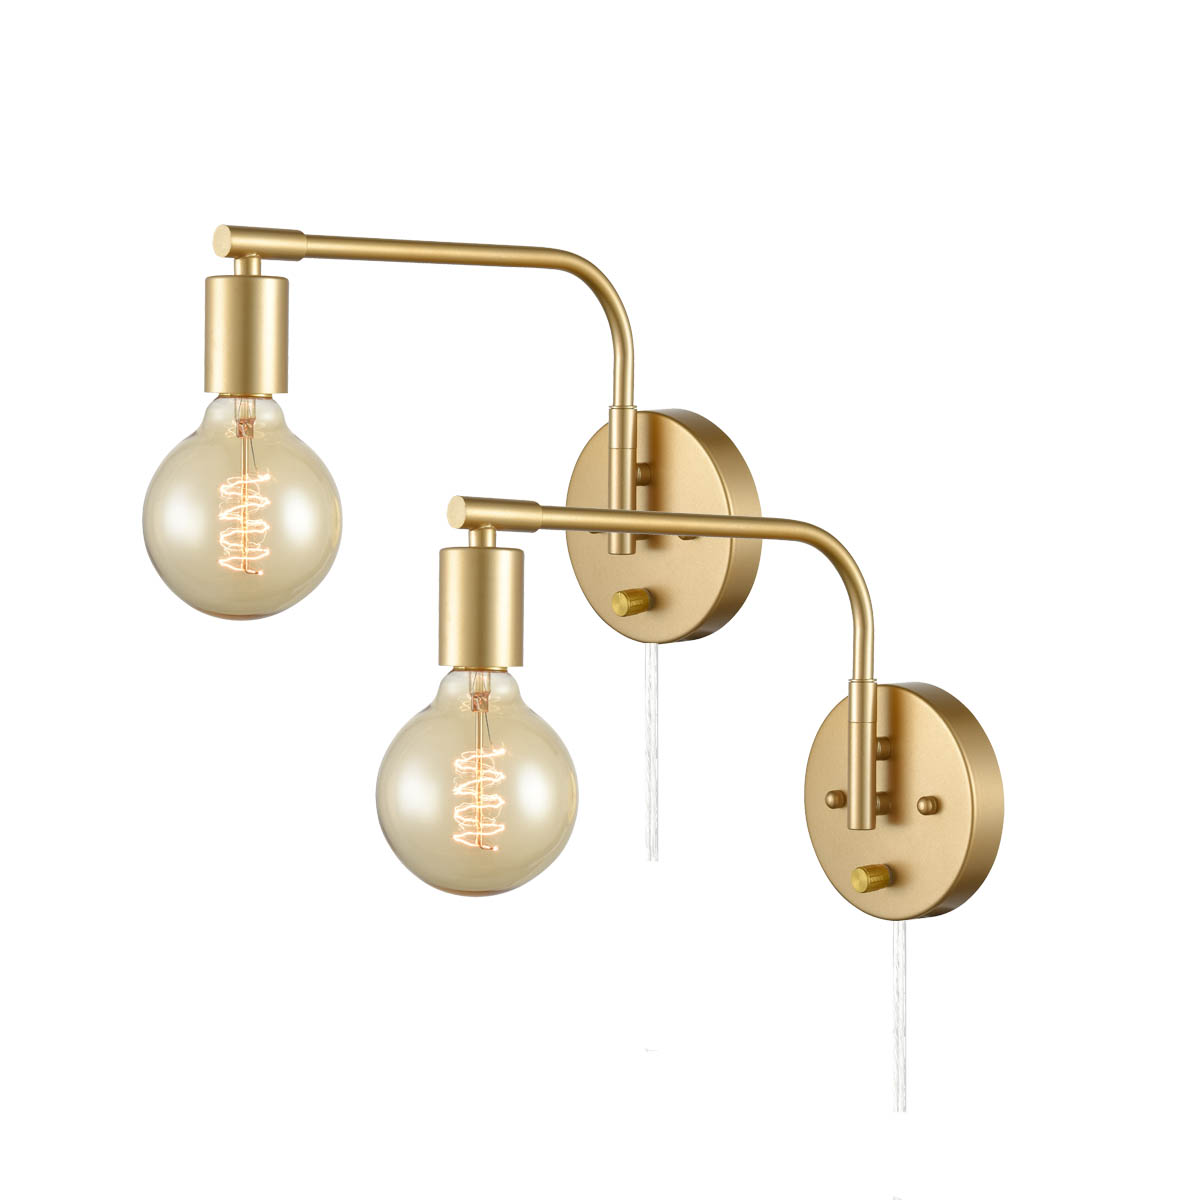 Modern Swing Arm Plug-in Wall Sconce Set of 2 Brass Light